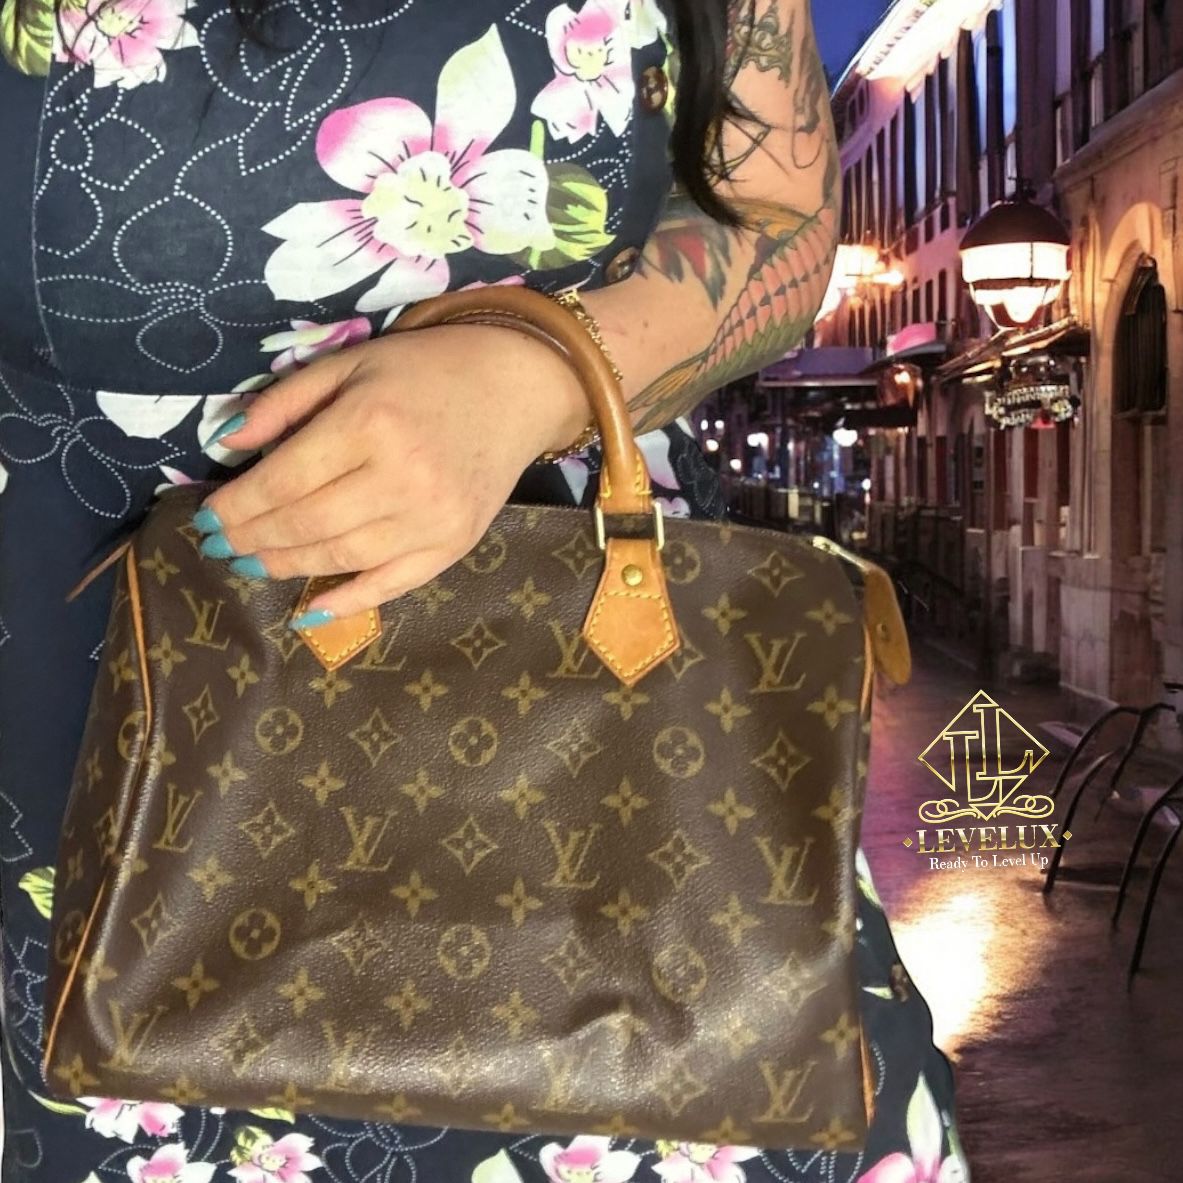 Authentic Louis Vuitton Speedy 30 Monogram Handbag